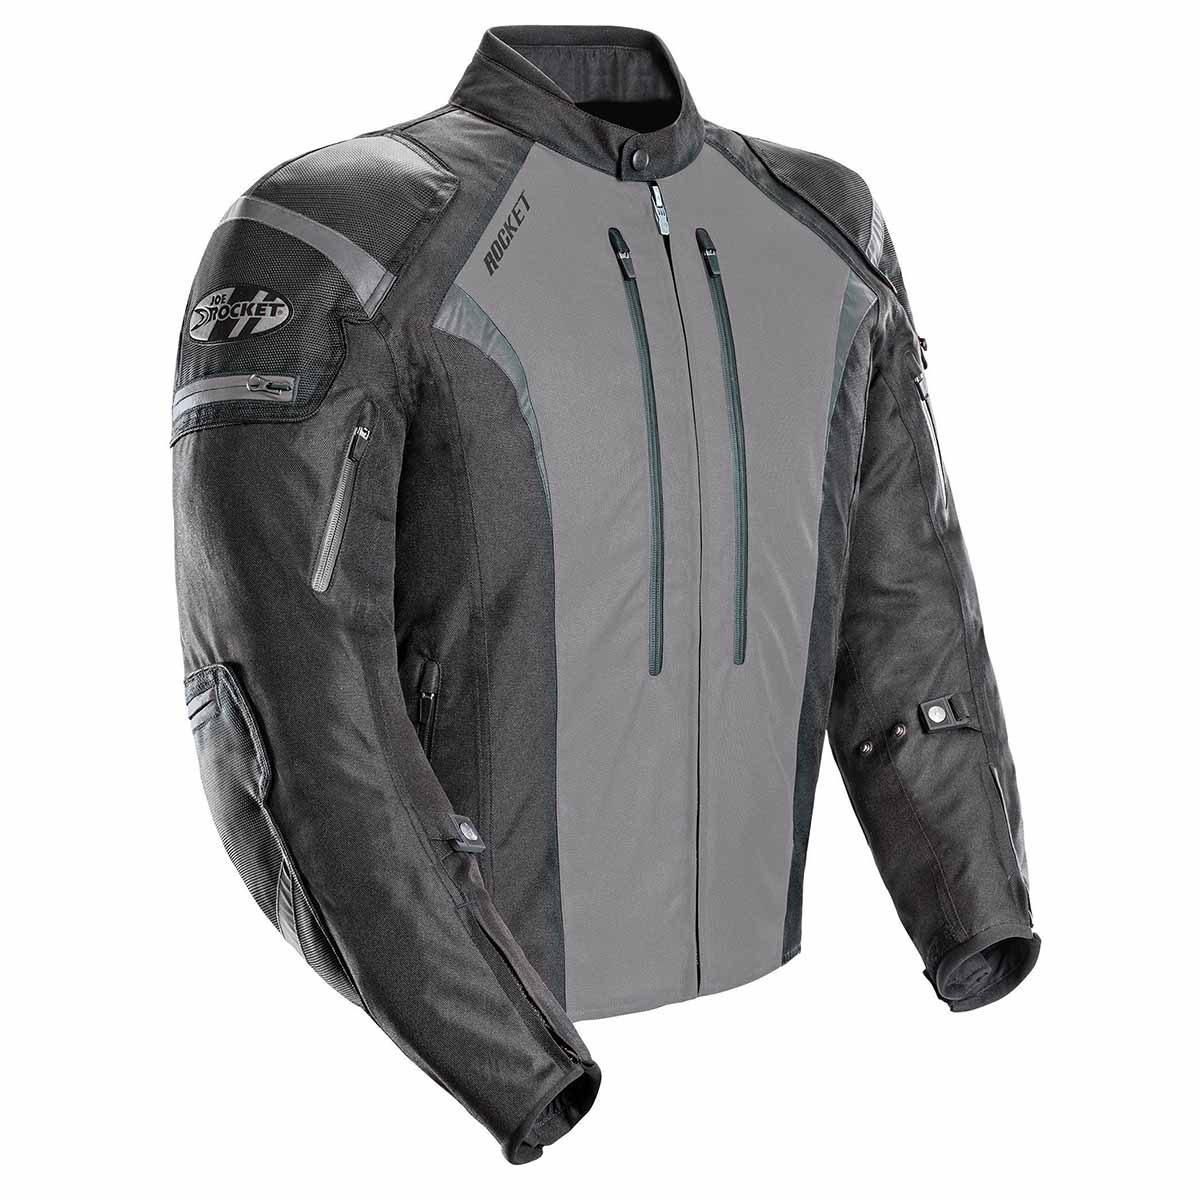 Joe Rocket Atomic 5.0 Men's Black And Grey Textile Jacket